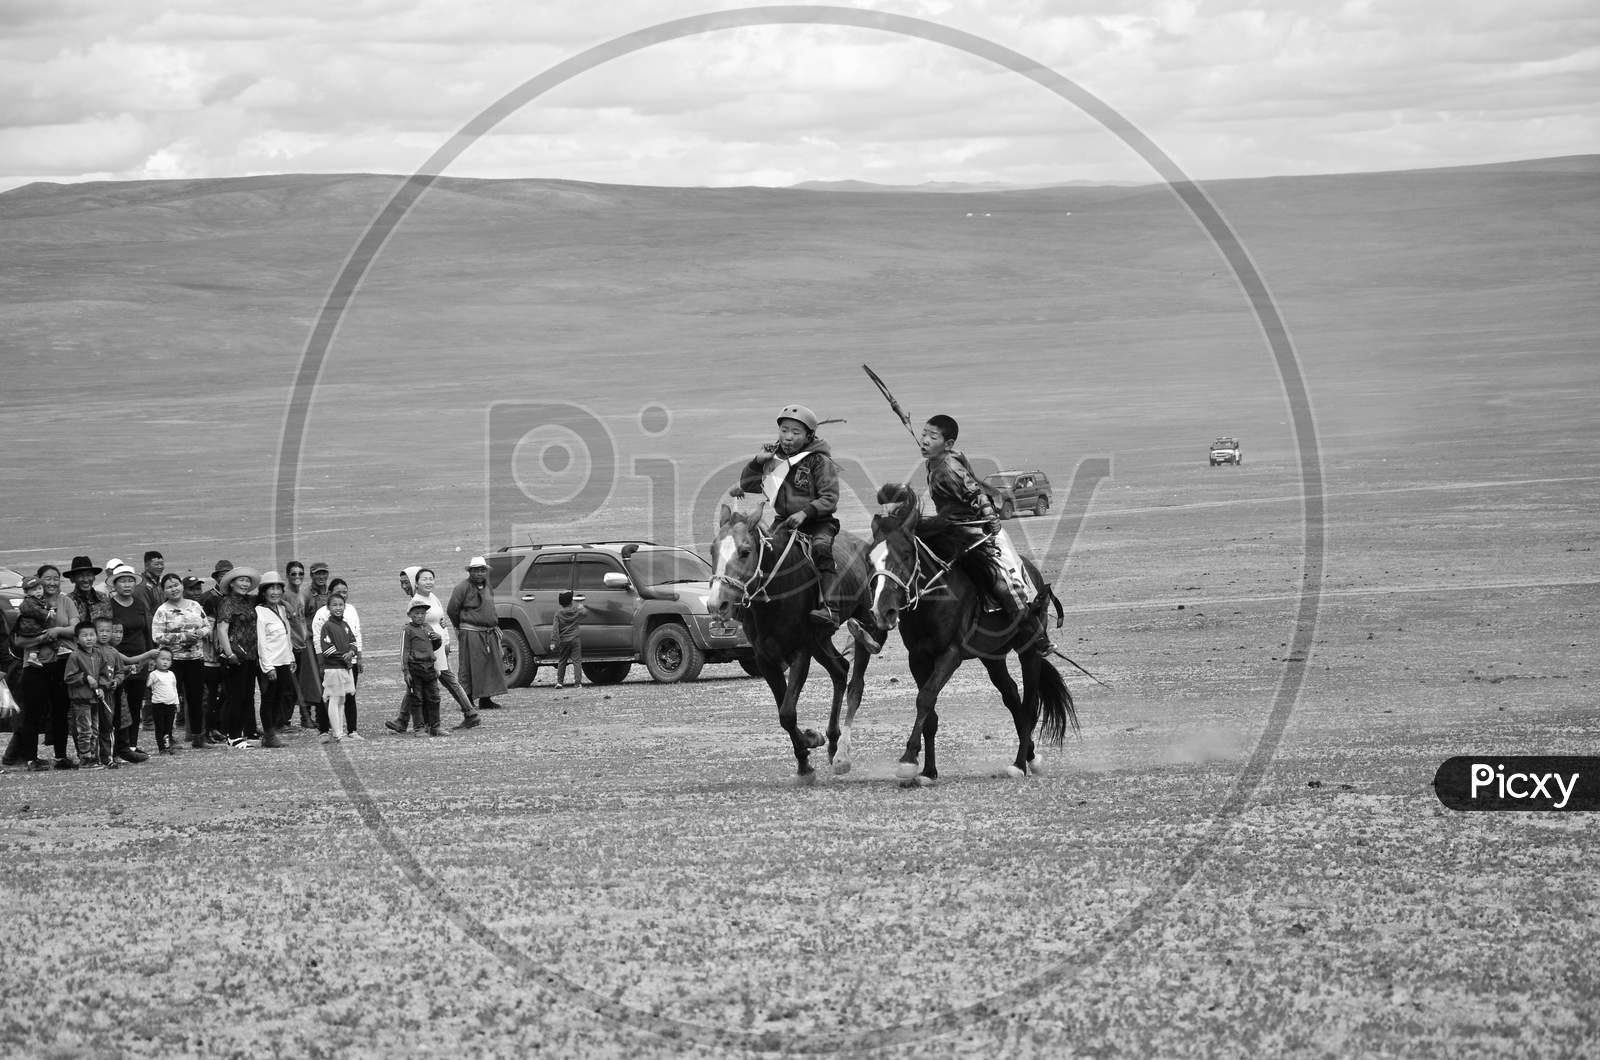 Mongolian horse racing